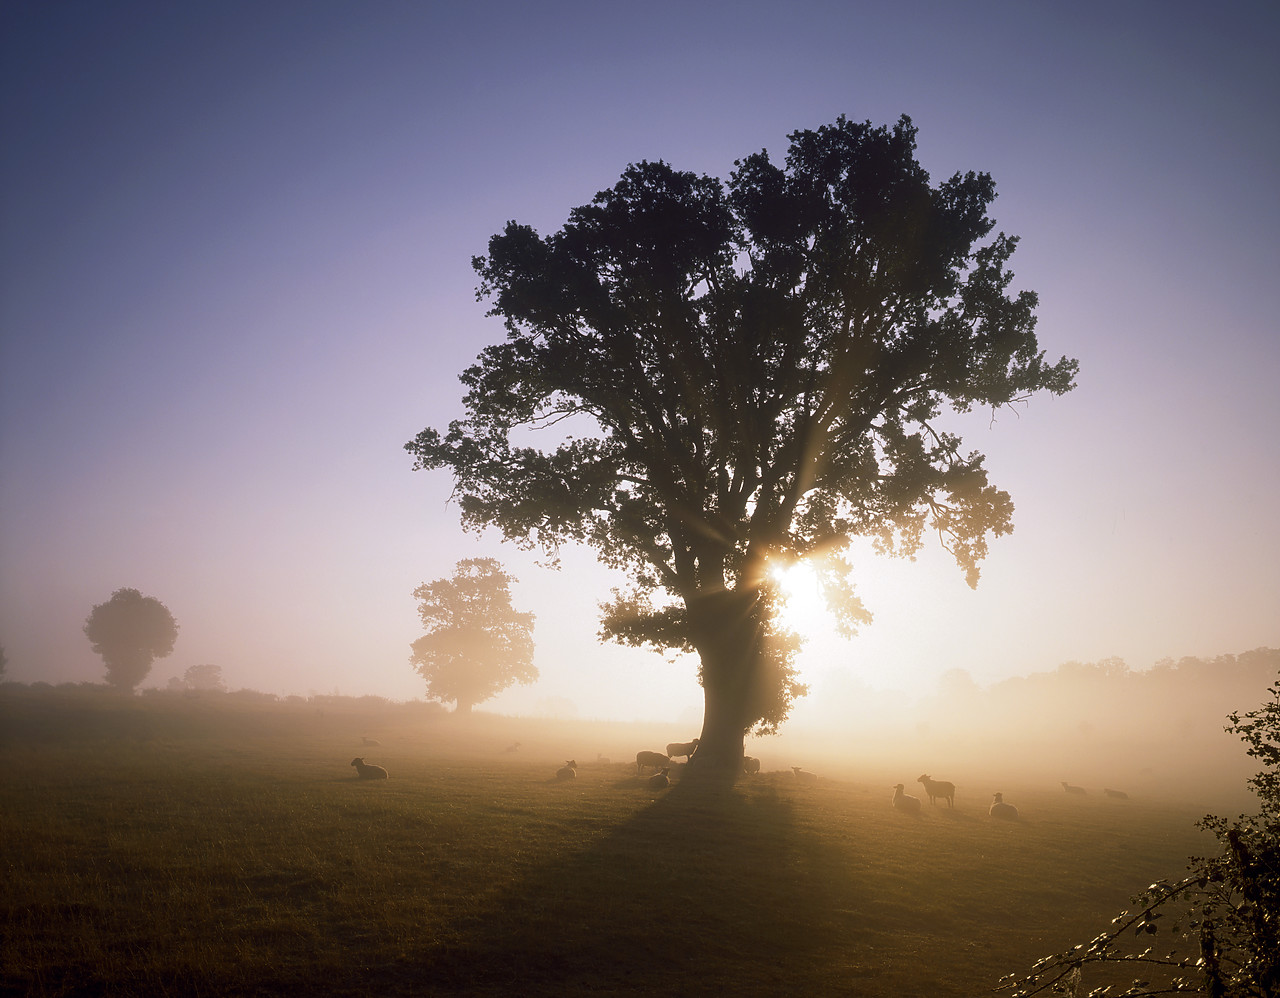 #913700-5 - Sunlight Streaming through Tree, Surlingham, Norfolk, England